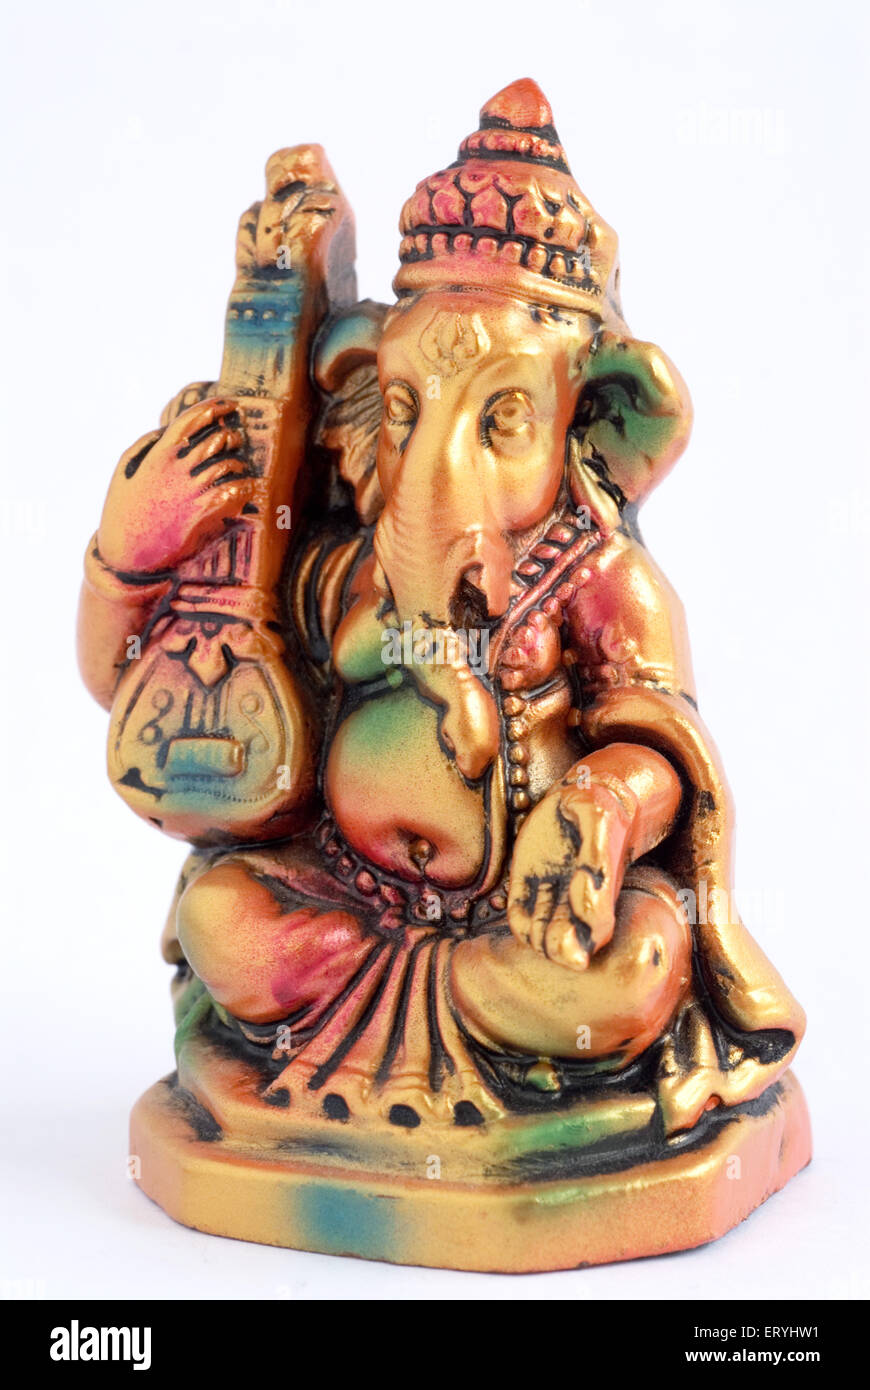 Colourful statue of lord Ganesha elephant headed god playing tambora ; India Stock Photo